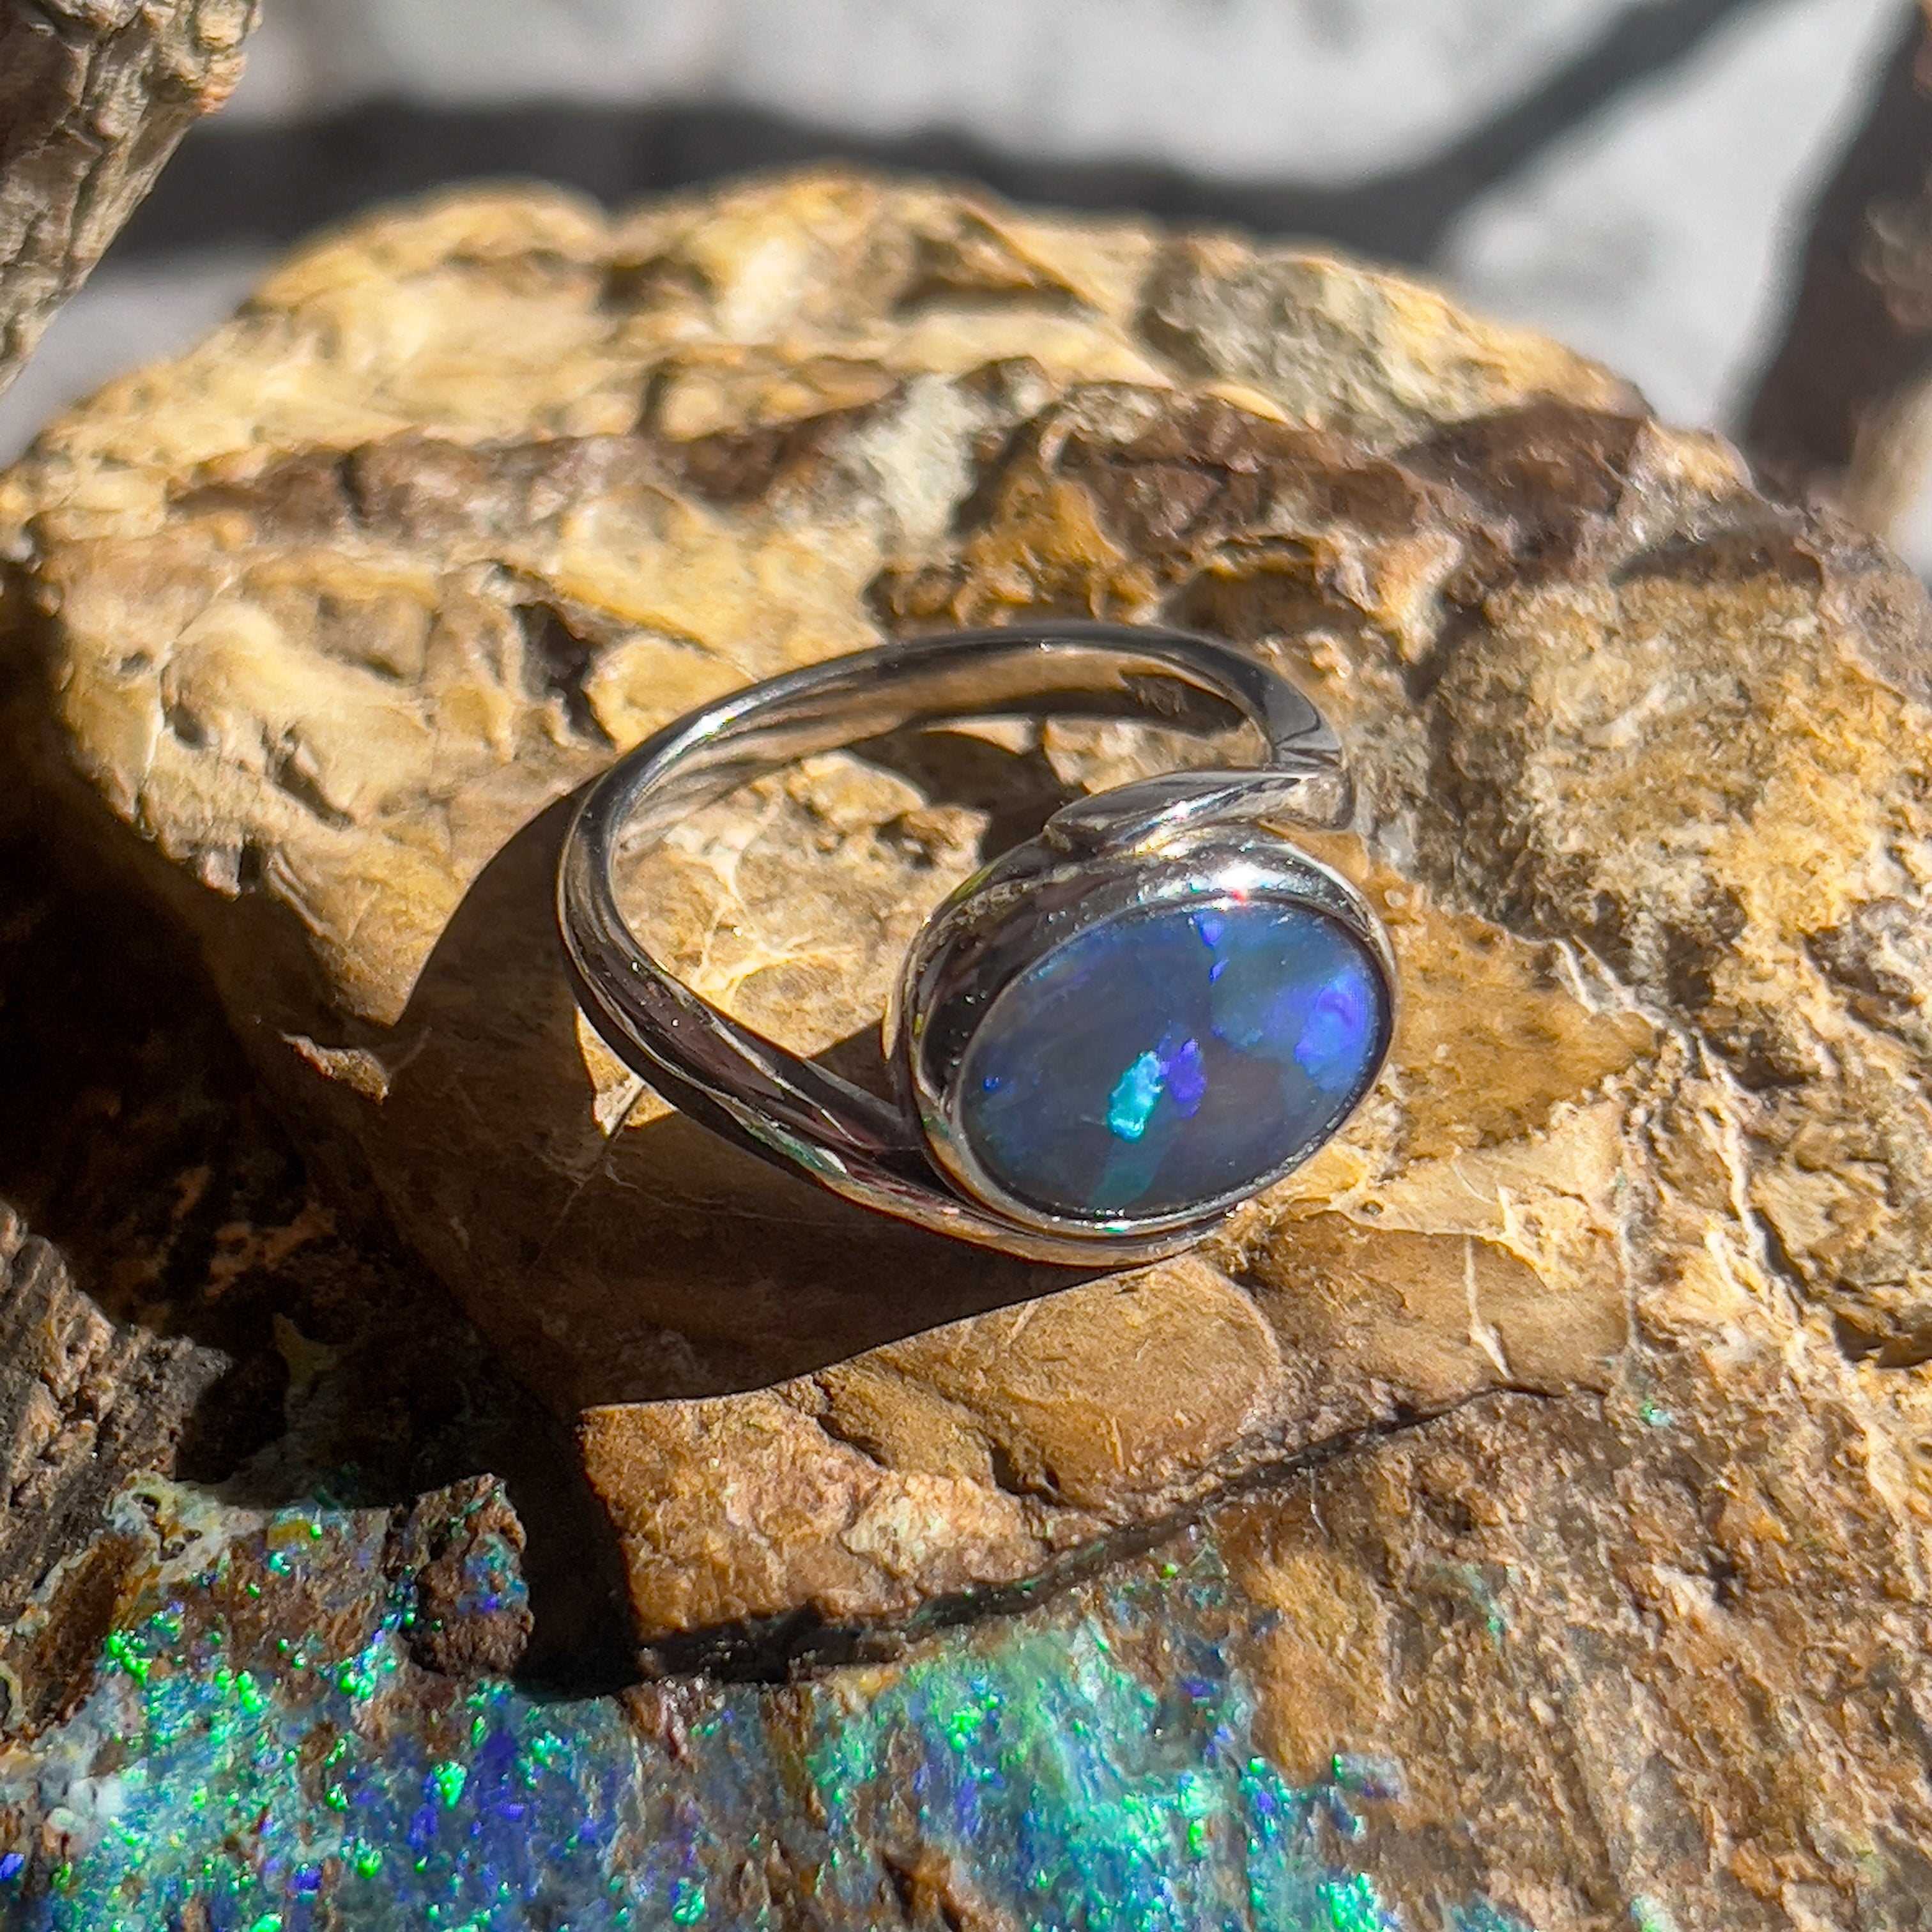 18kt White Gold cross over Black Opal 1.5ct Blue Green solitaire ring - Masterpiece Jewellery Opal & Gems Sydney Australia | Online Shop